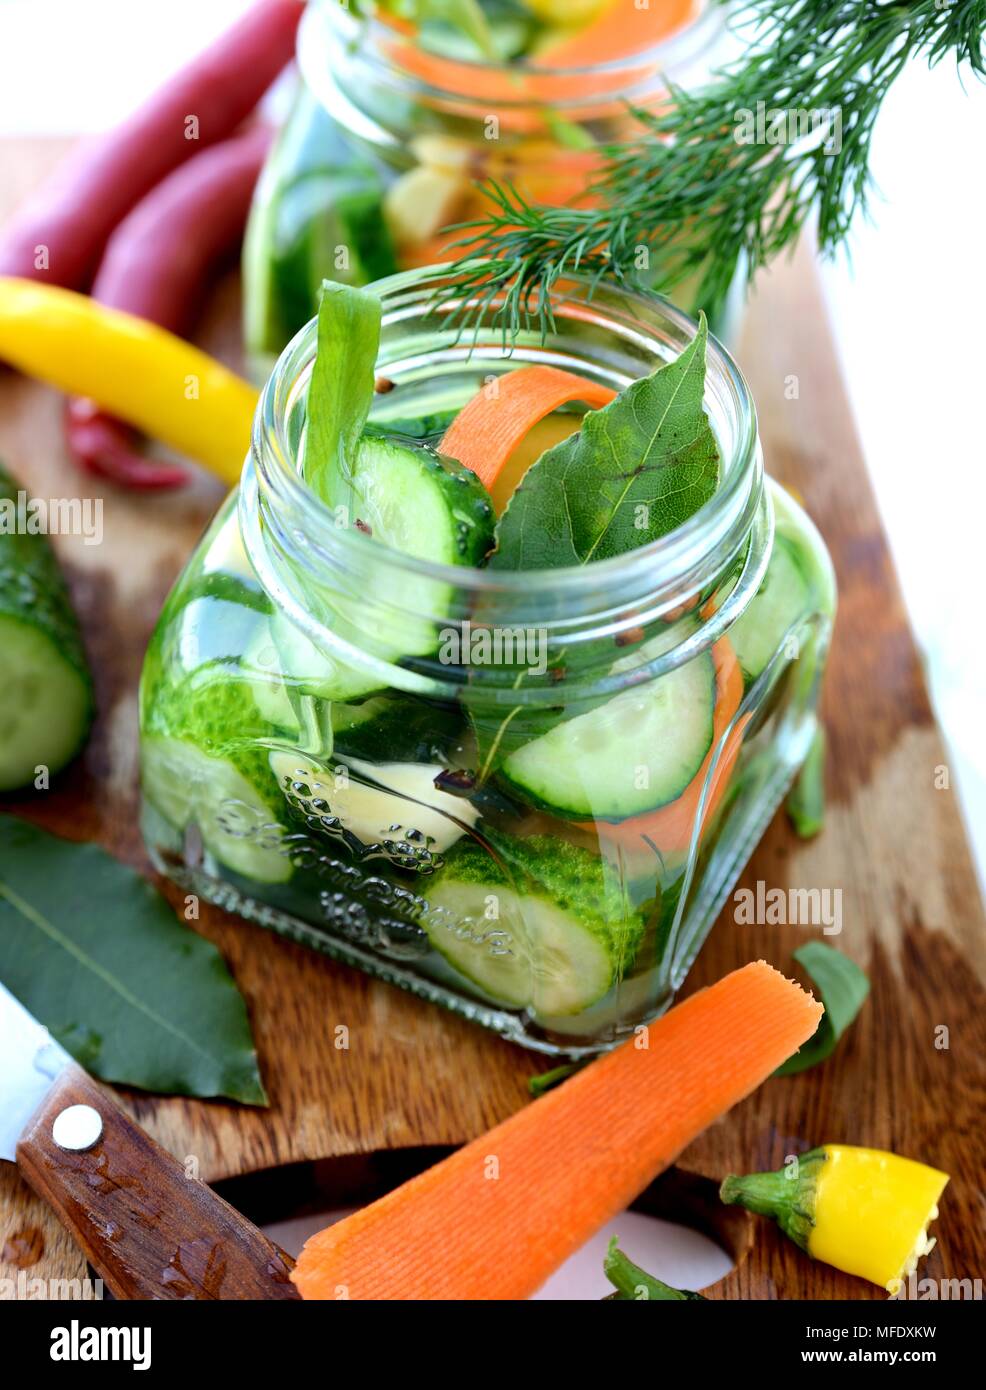 Making pickling cucumbers Stock Photo